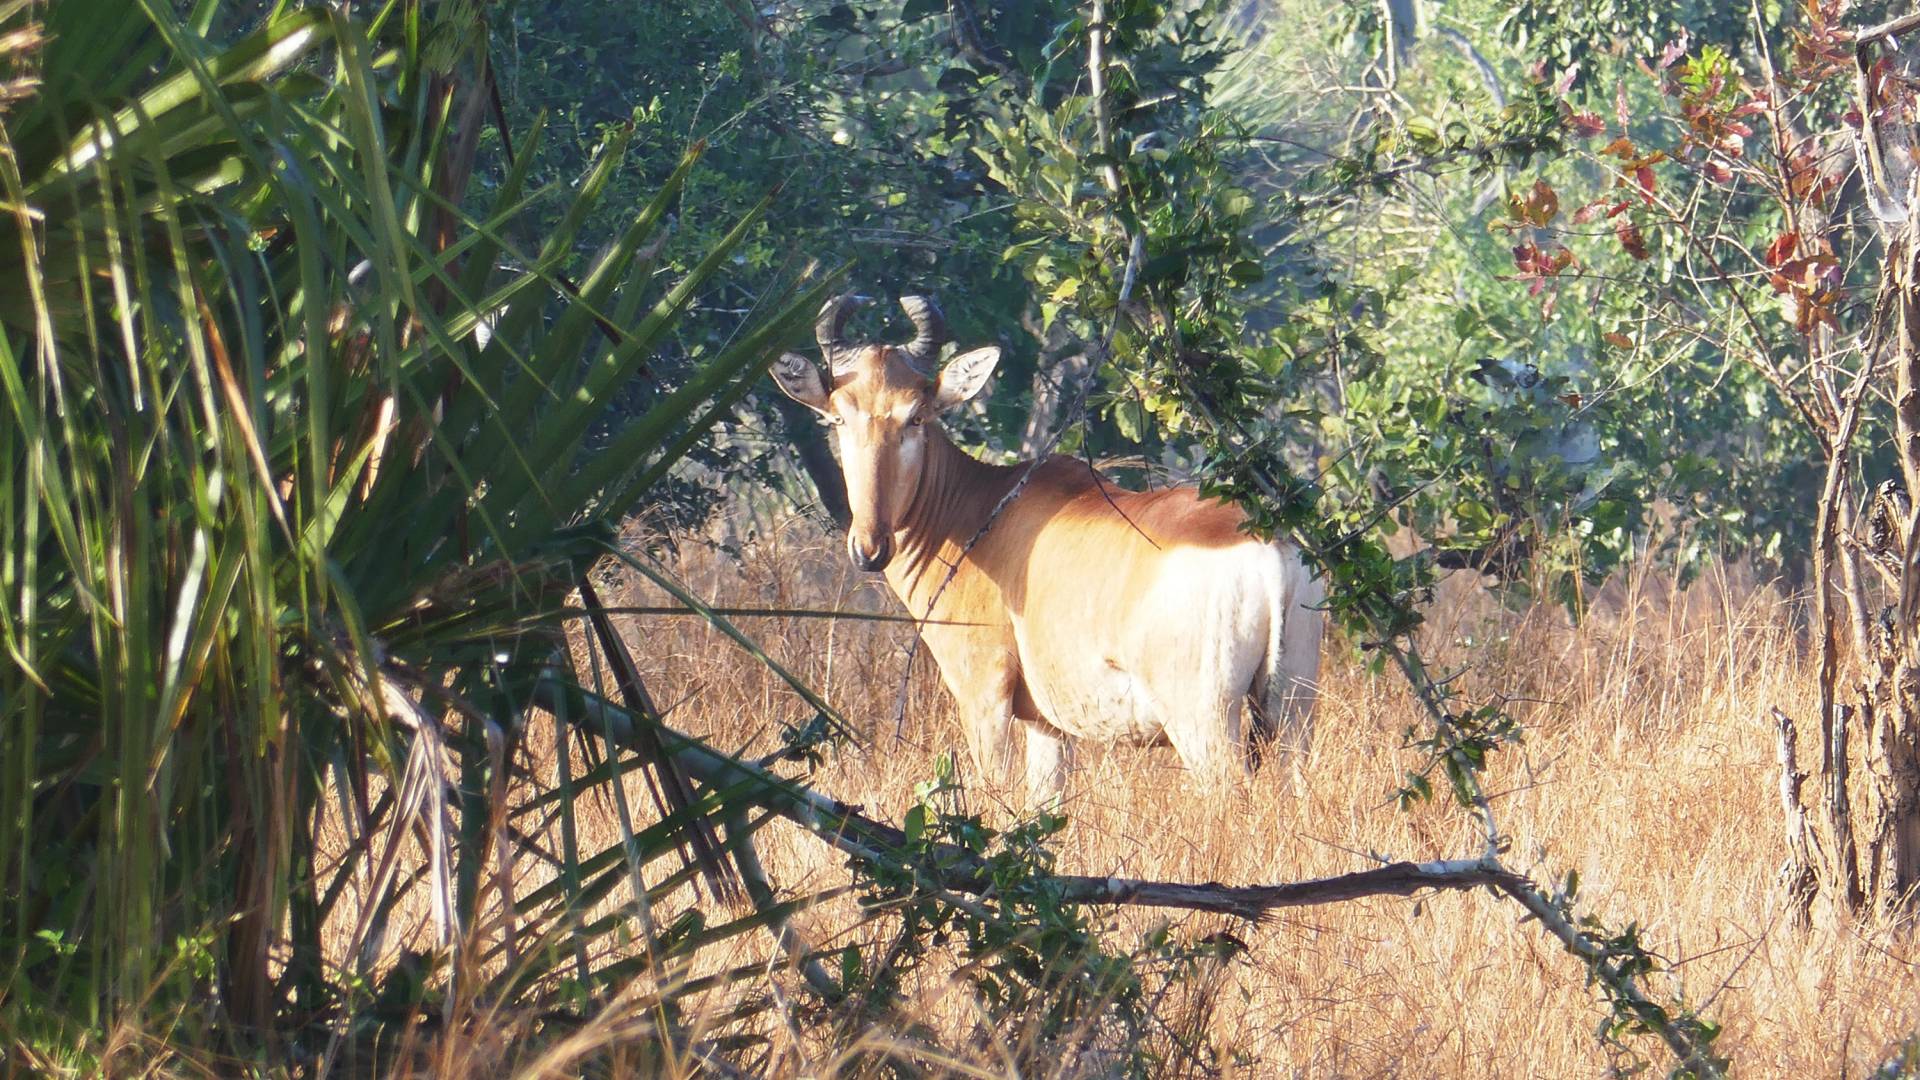 An antelope is seen through foliage